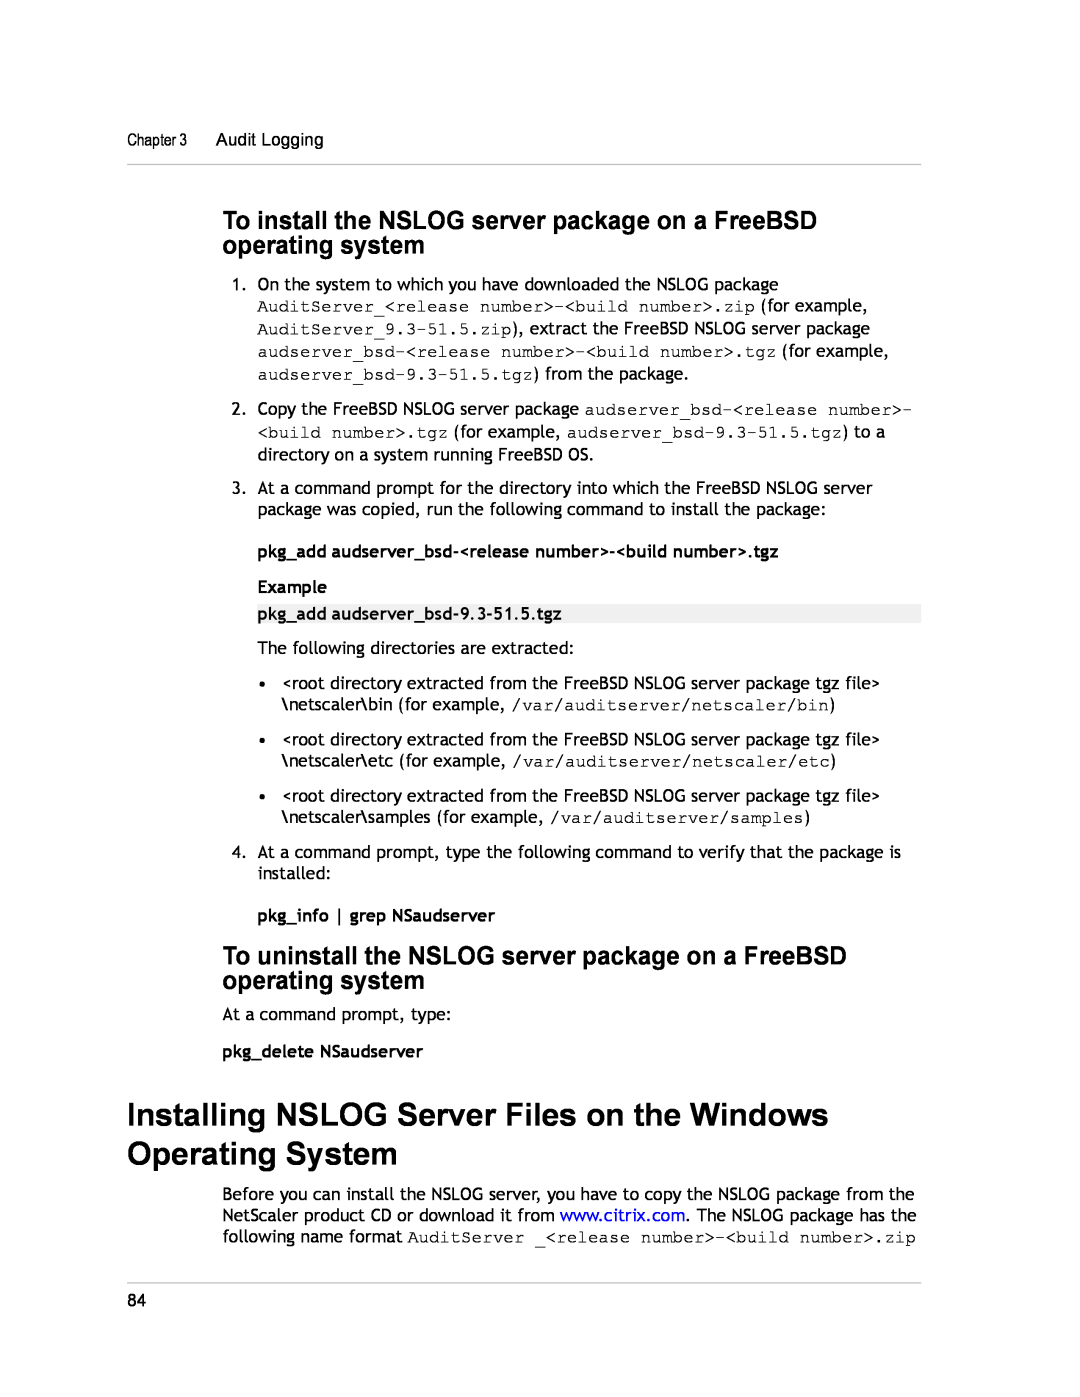 Citrix Systems CITRIX NETSCALER 9.3 Installing NSLOG Server Files on the Windows Operating System, pkgdelete NSaudserver 